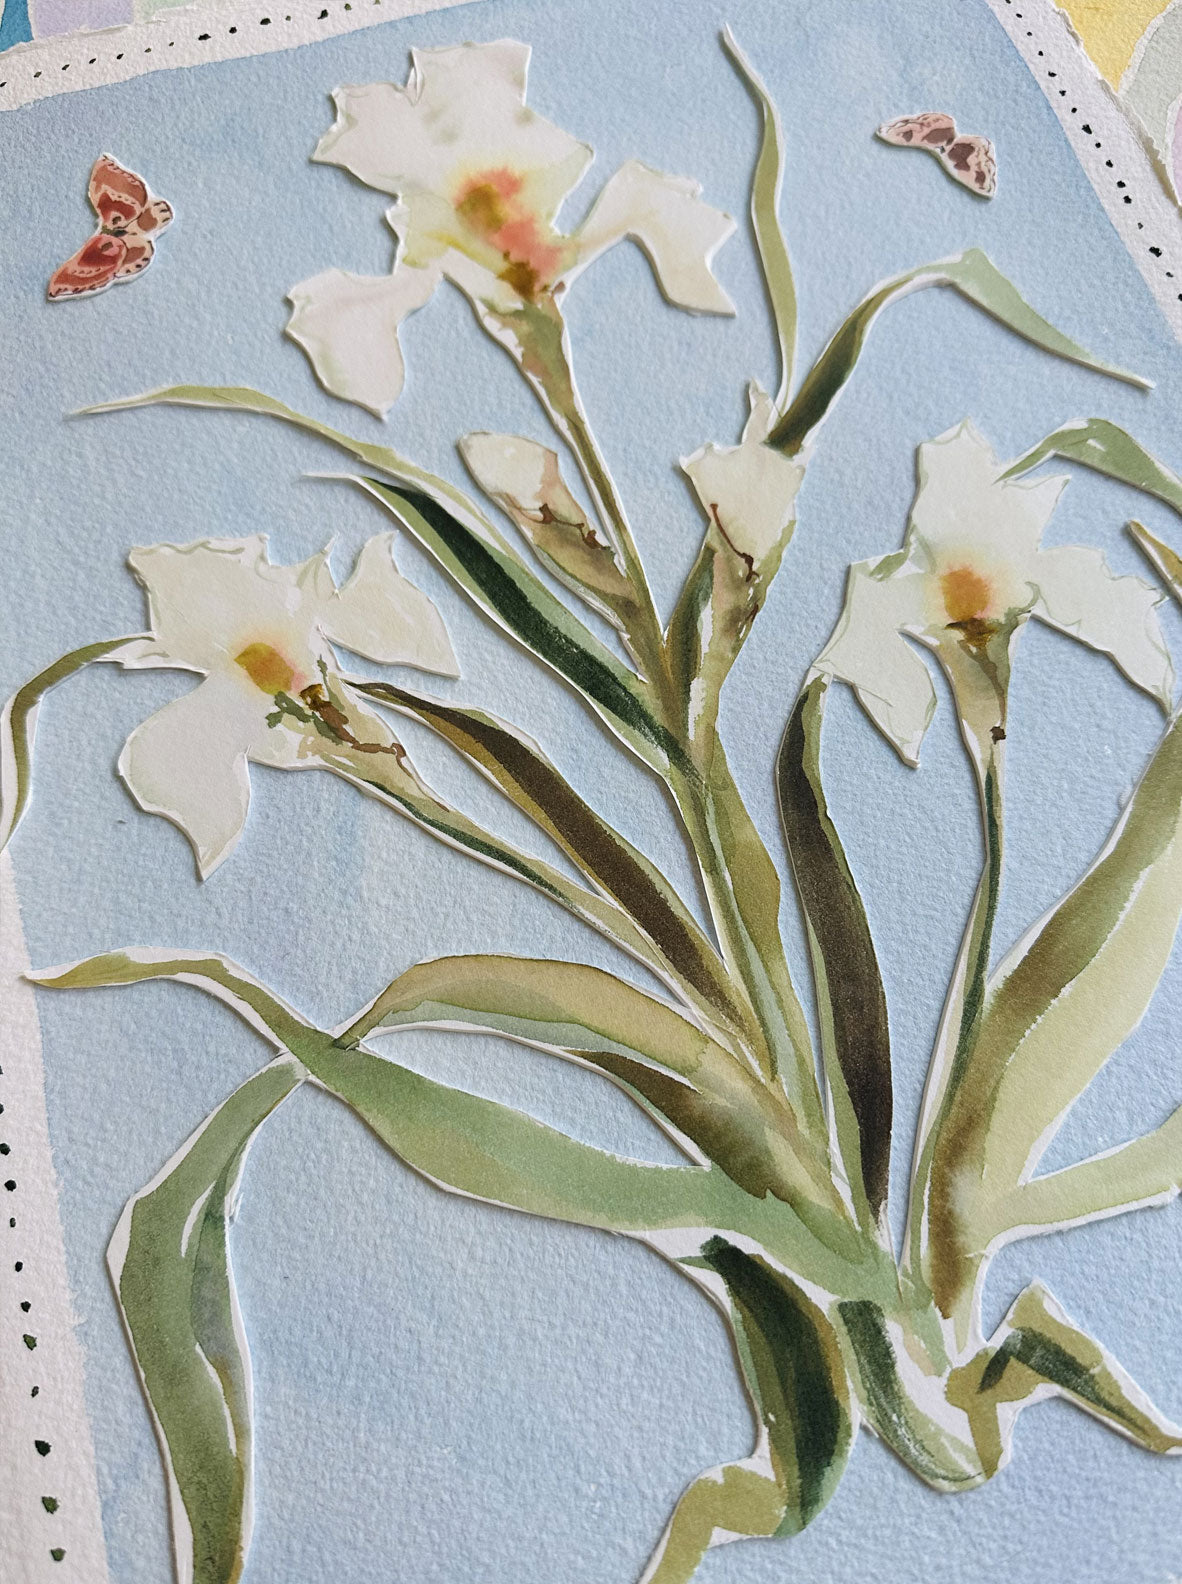 Botanical Collage: Iris on Blue